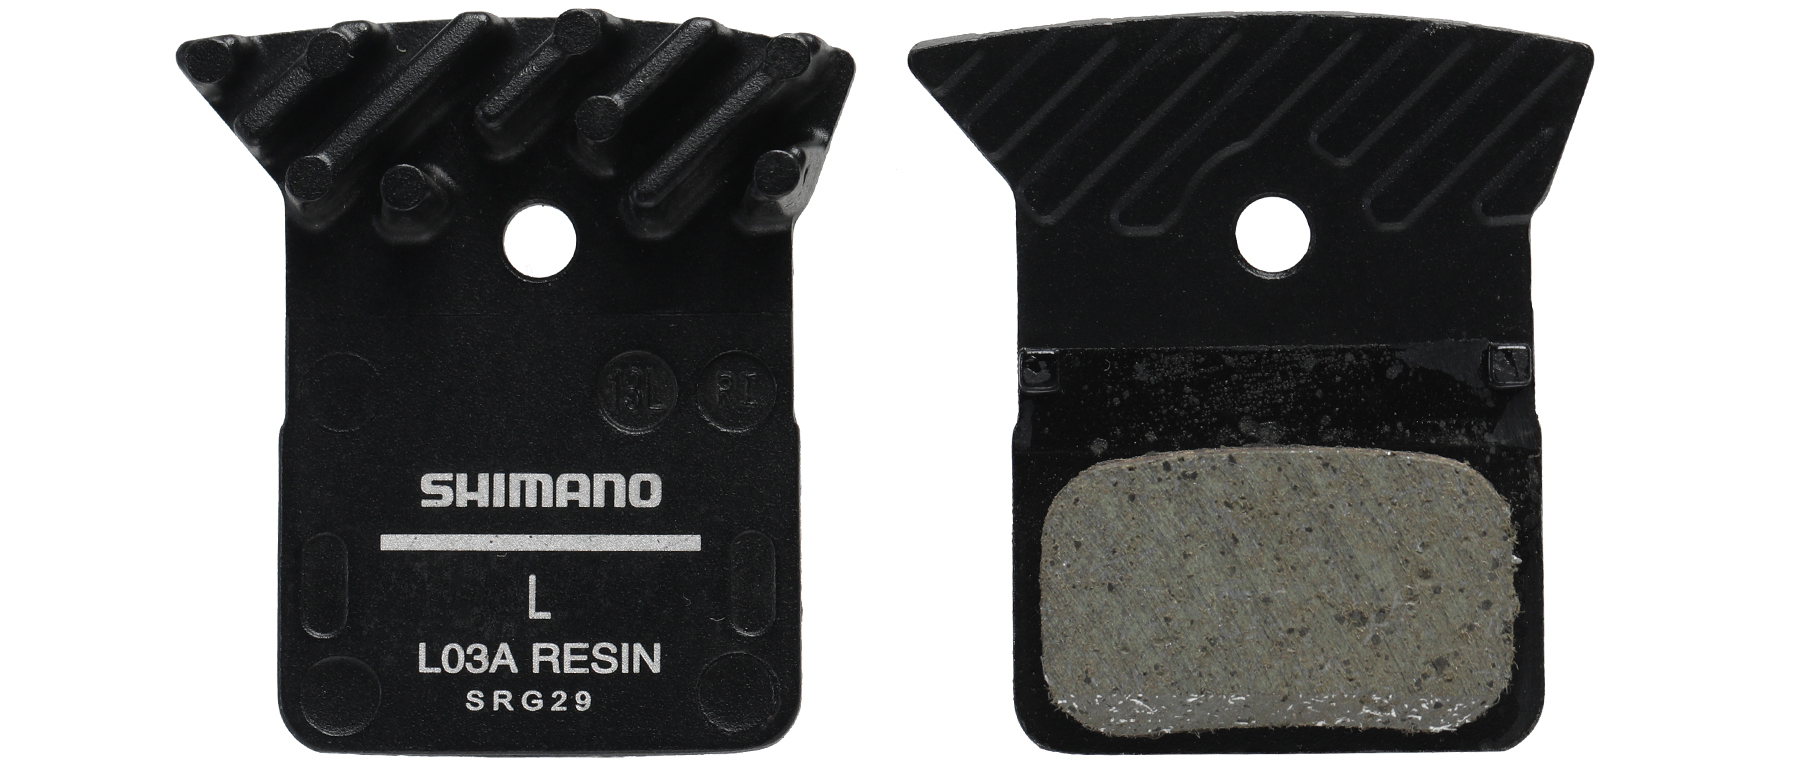 Shimano L03A Resin Disc Brake Pads